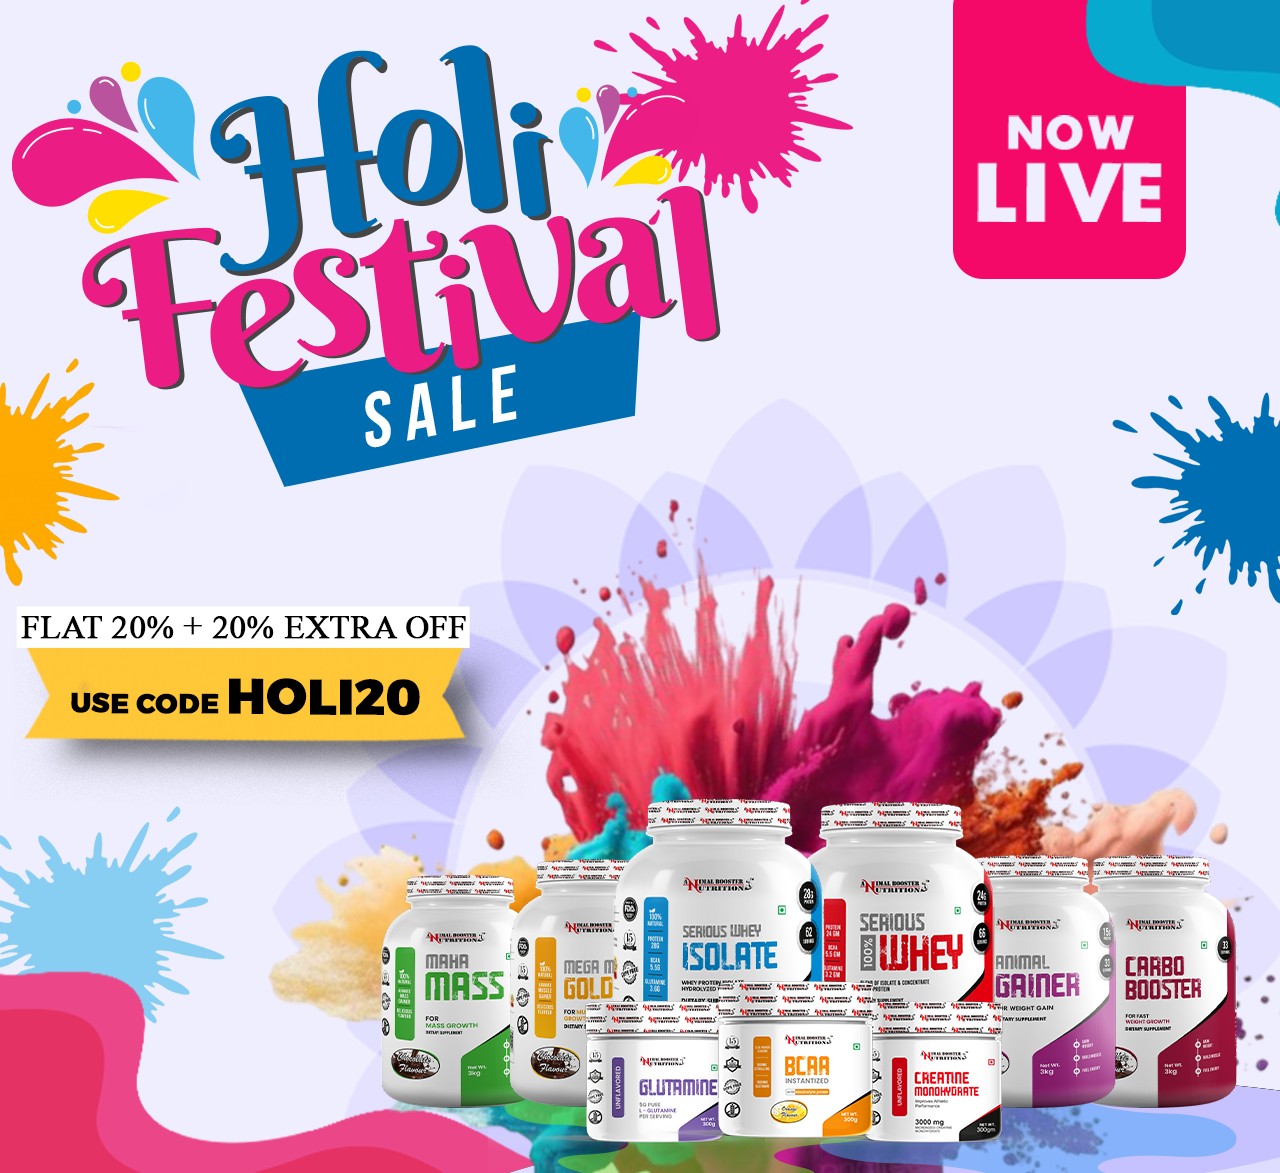 Holi Festival Sale - 40% off deal